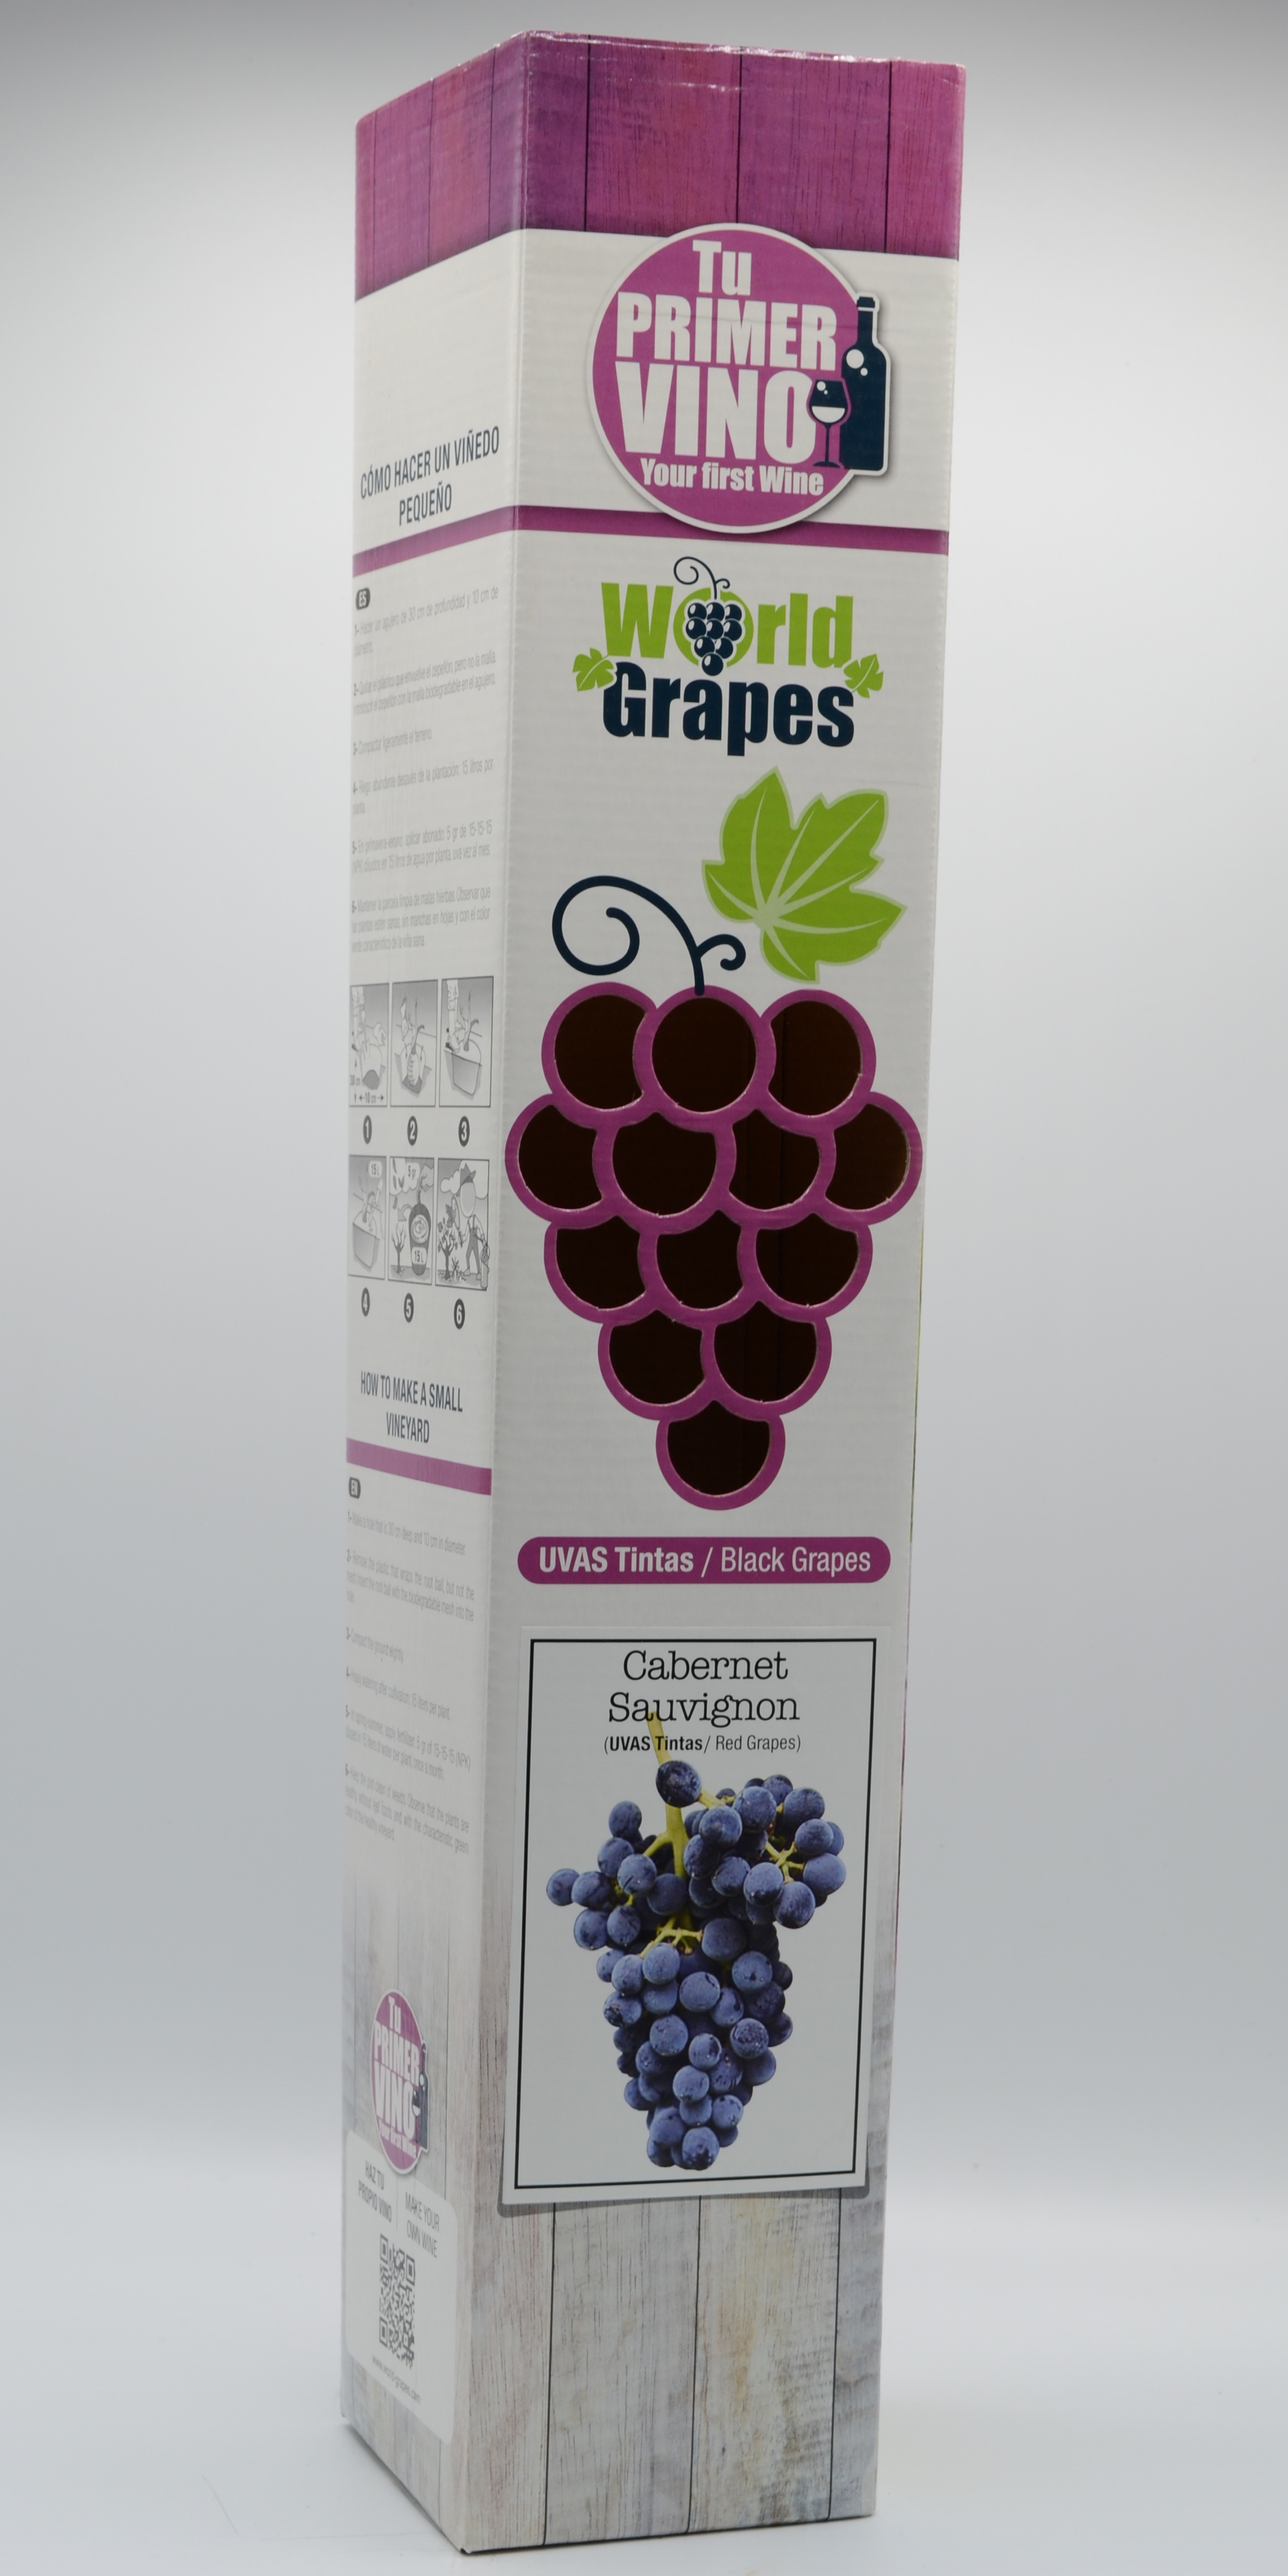 World-Grapes Cabernet Sauvignon